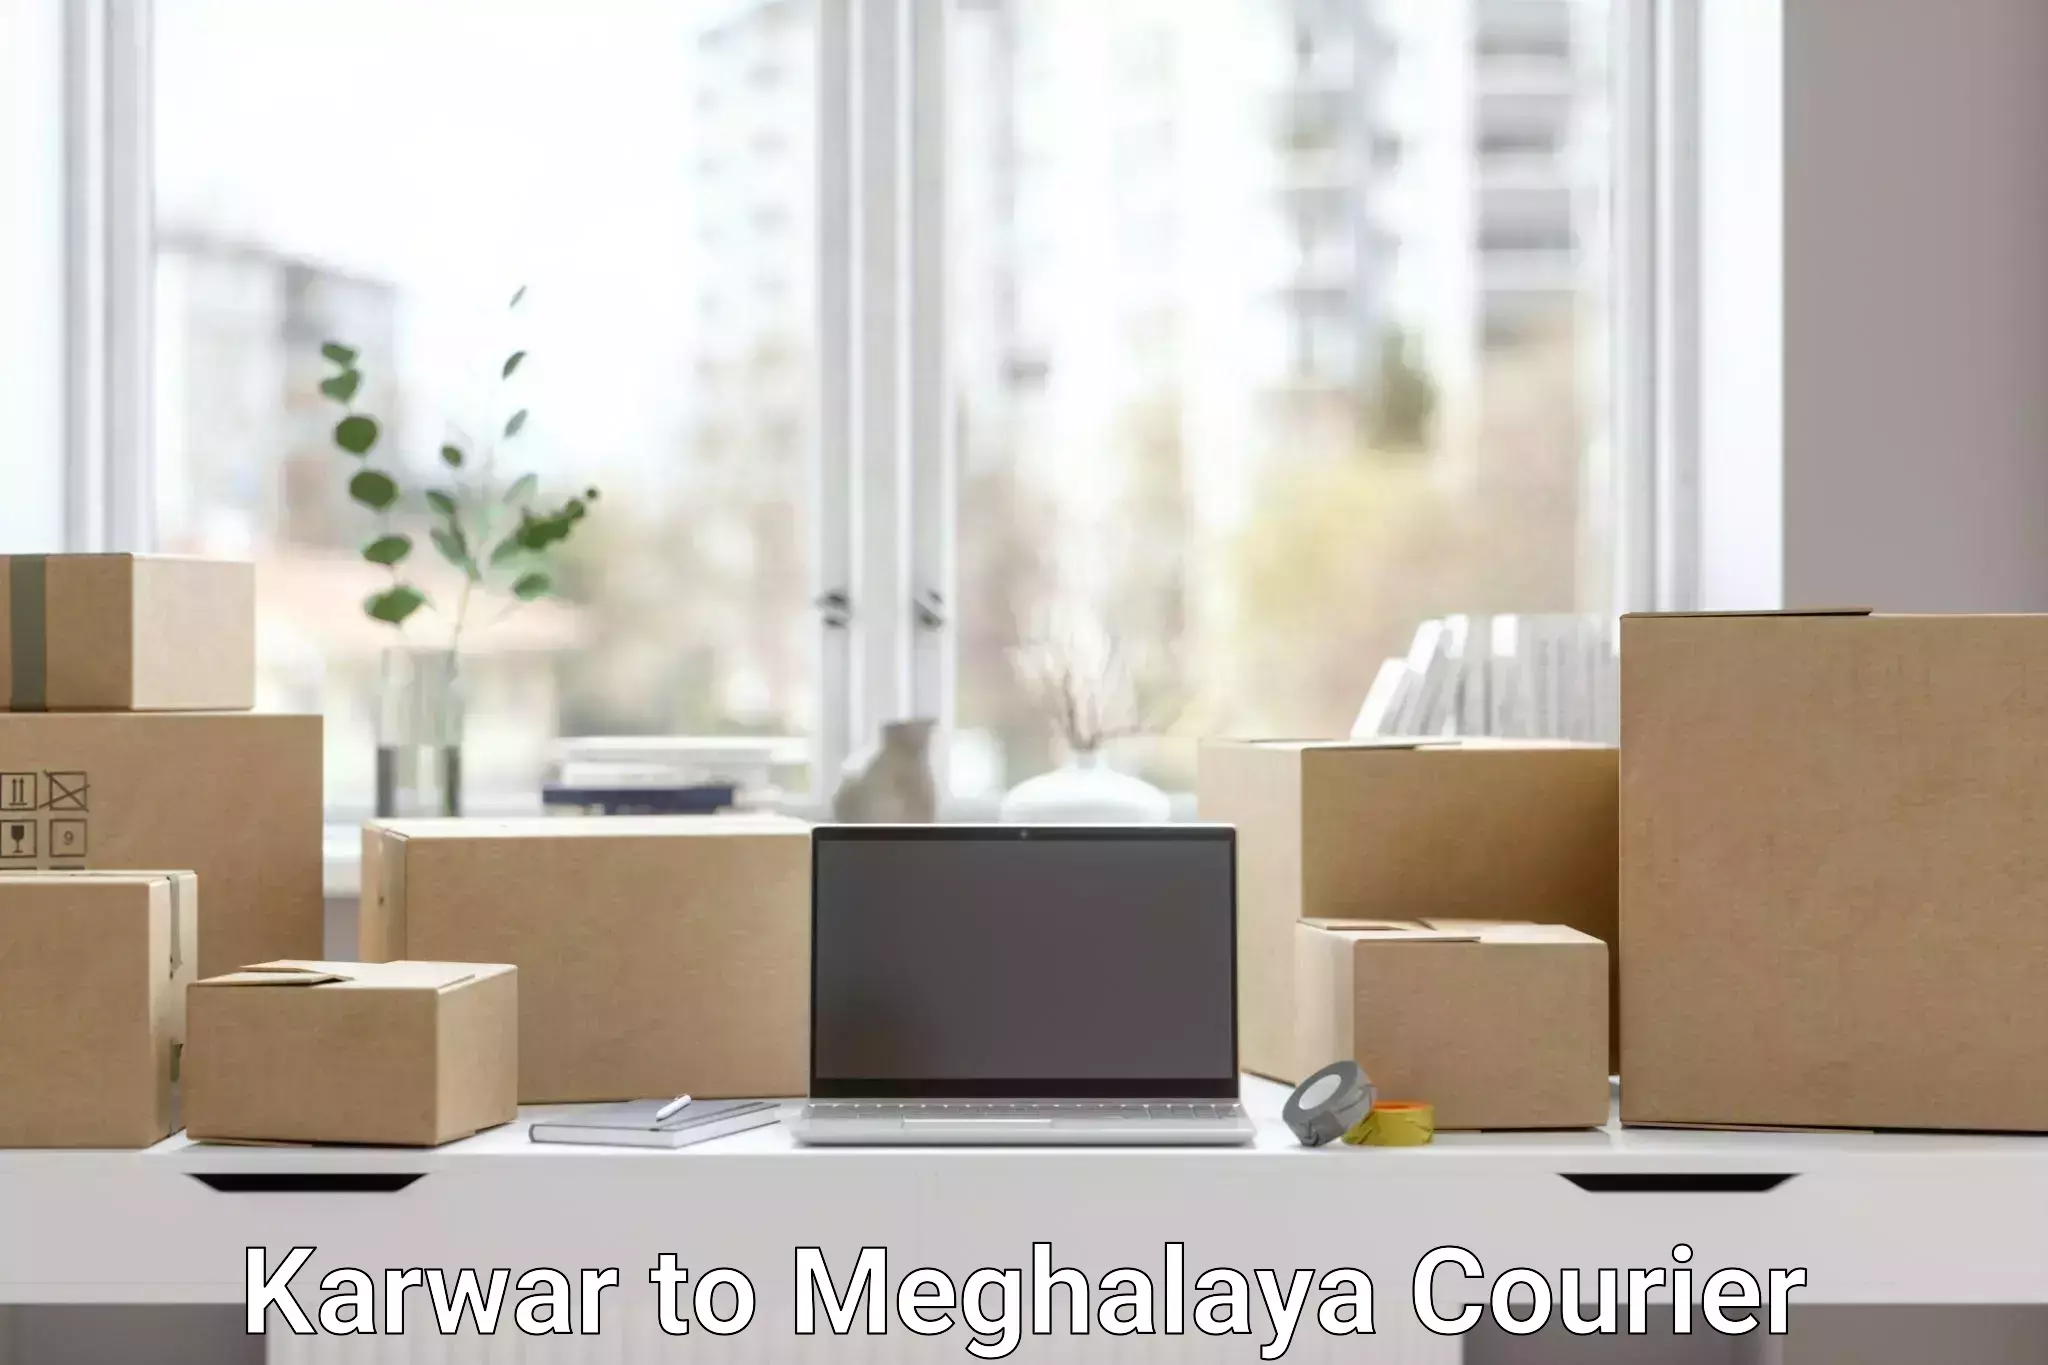 Global logistics network Karwar to Meghalaya